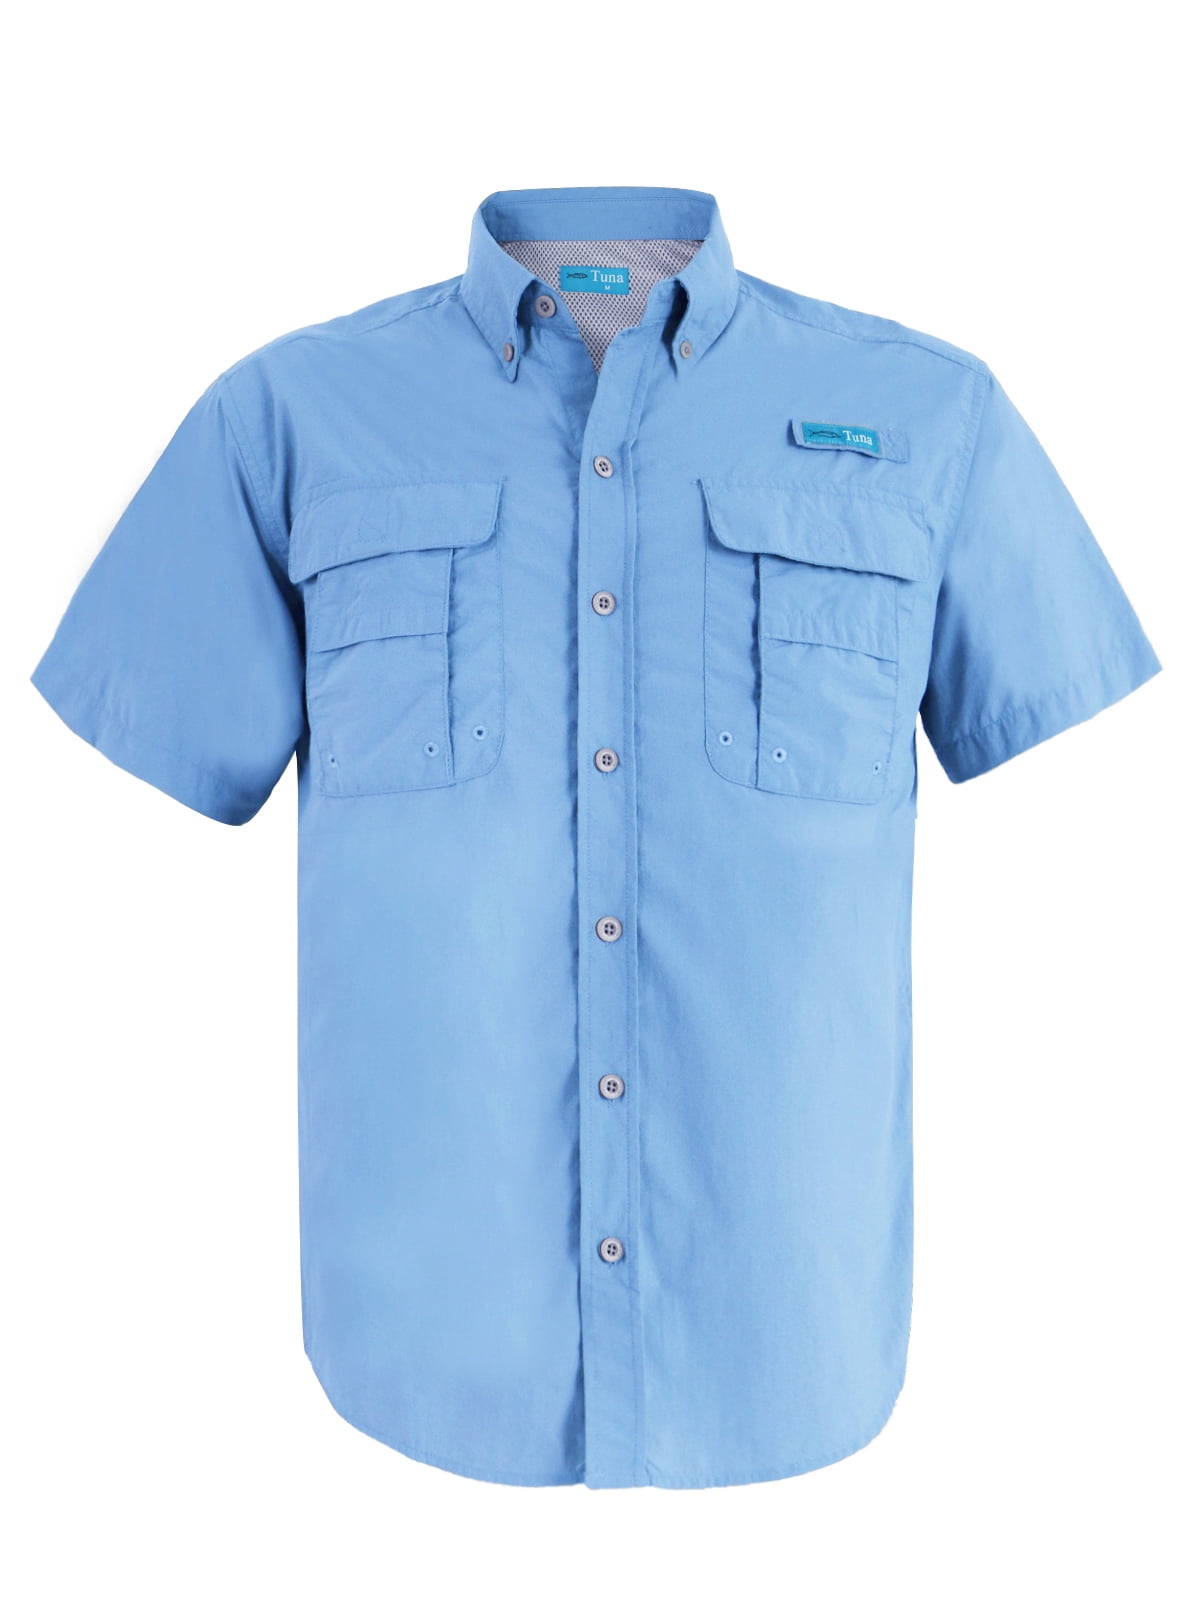 Men's Magellan Fishing Shirt  Fishing shirts, Casual shirts for men,  Casual shirts